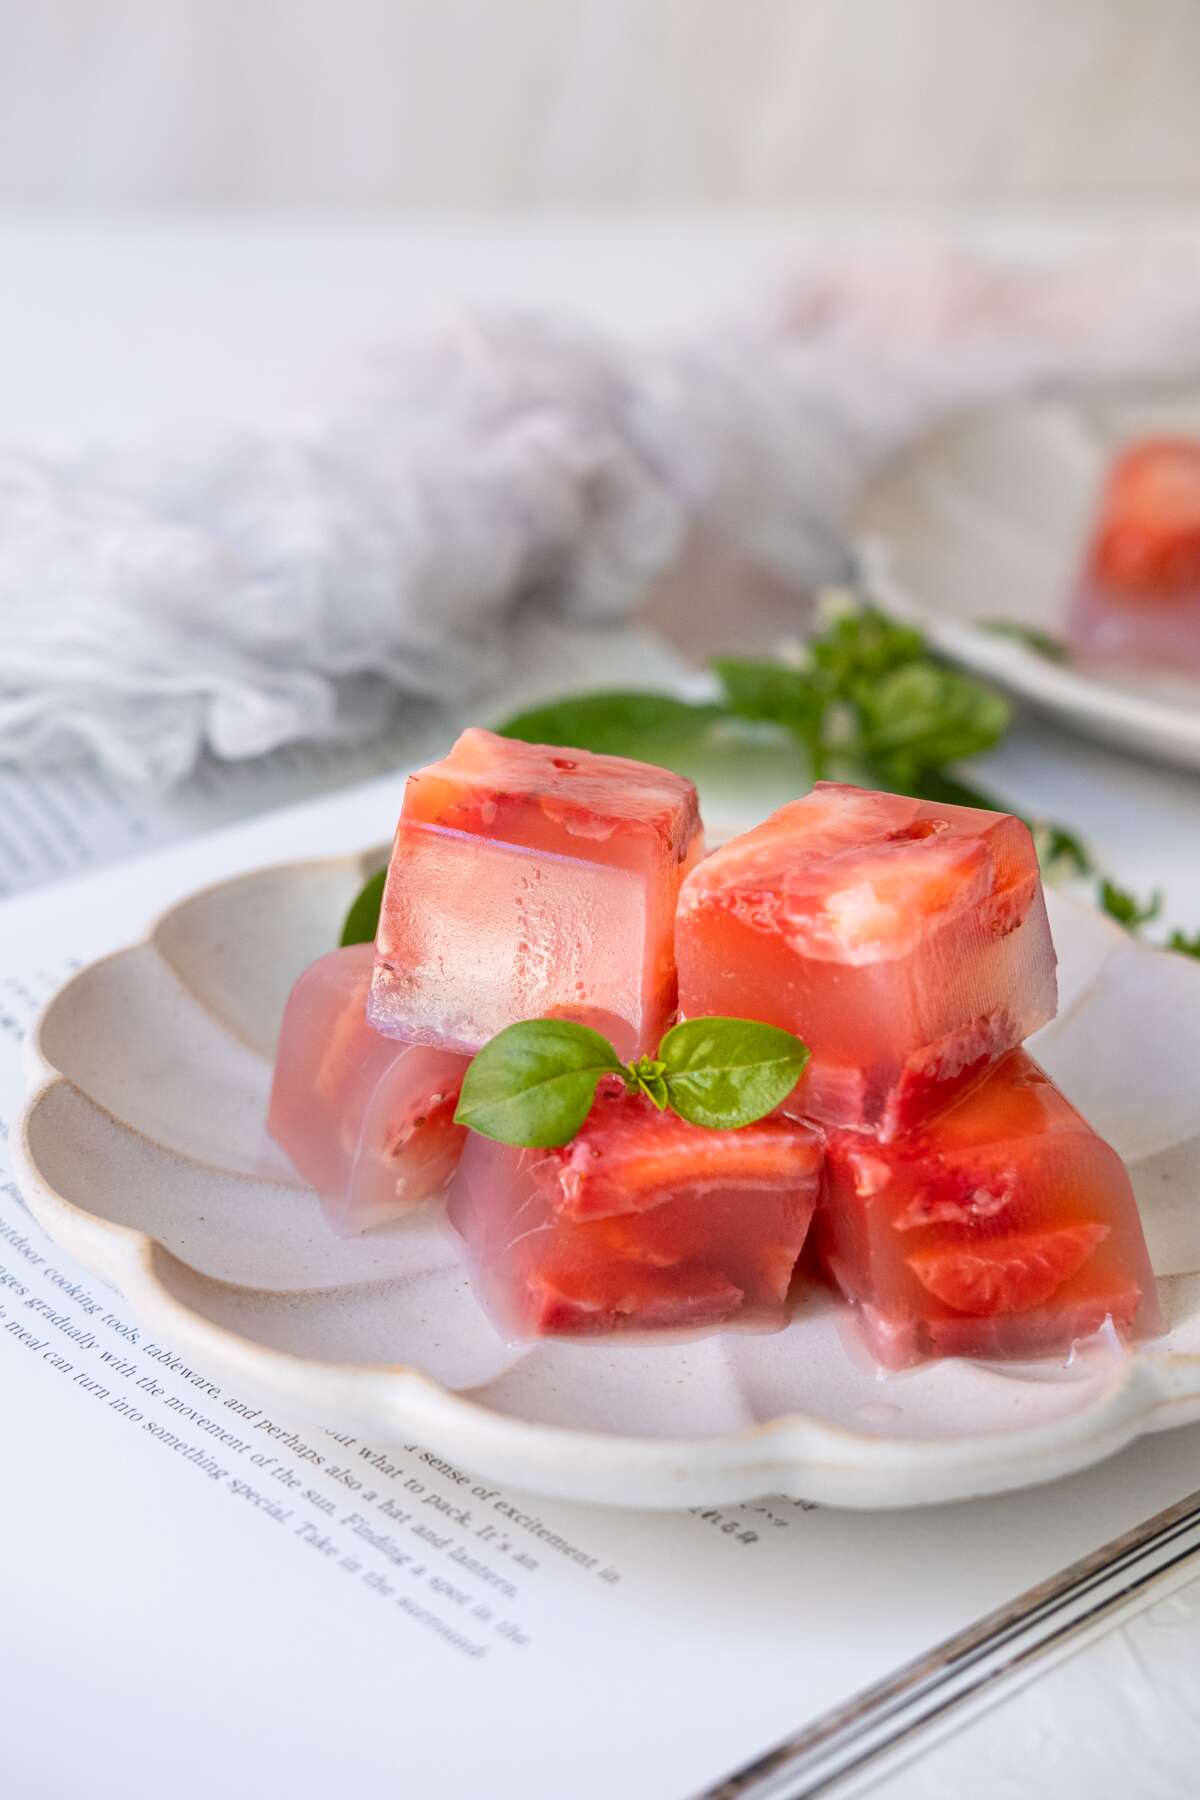 Strawberry agar jelly recipe. 